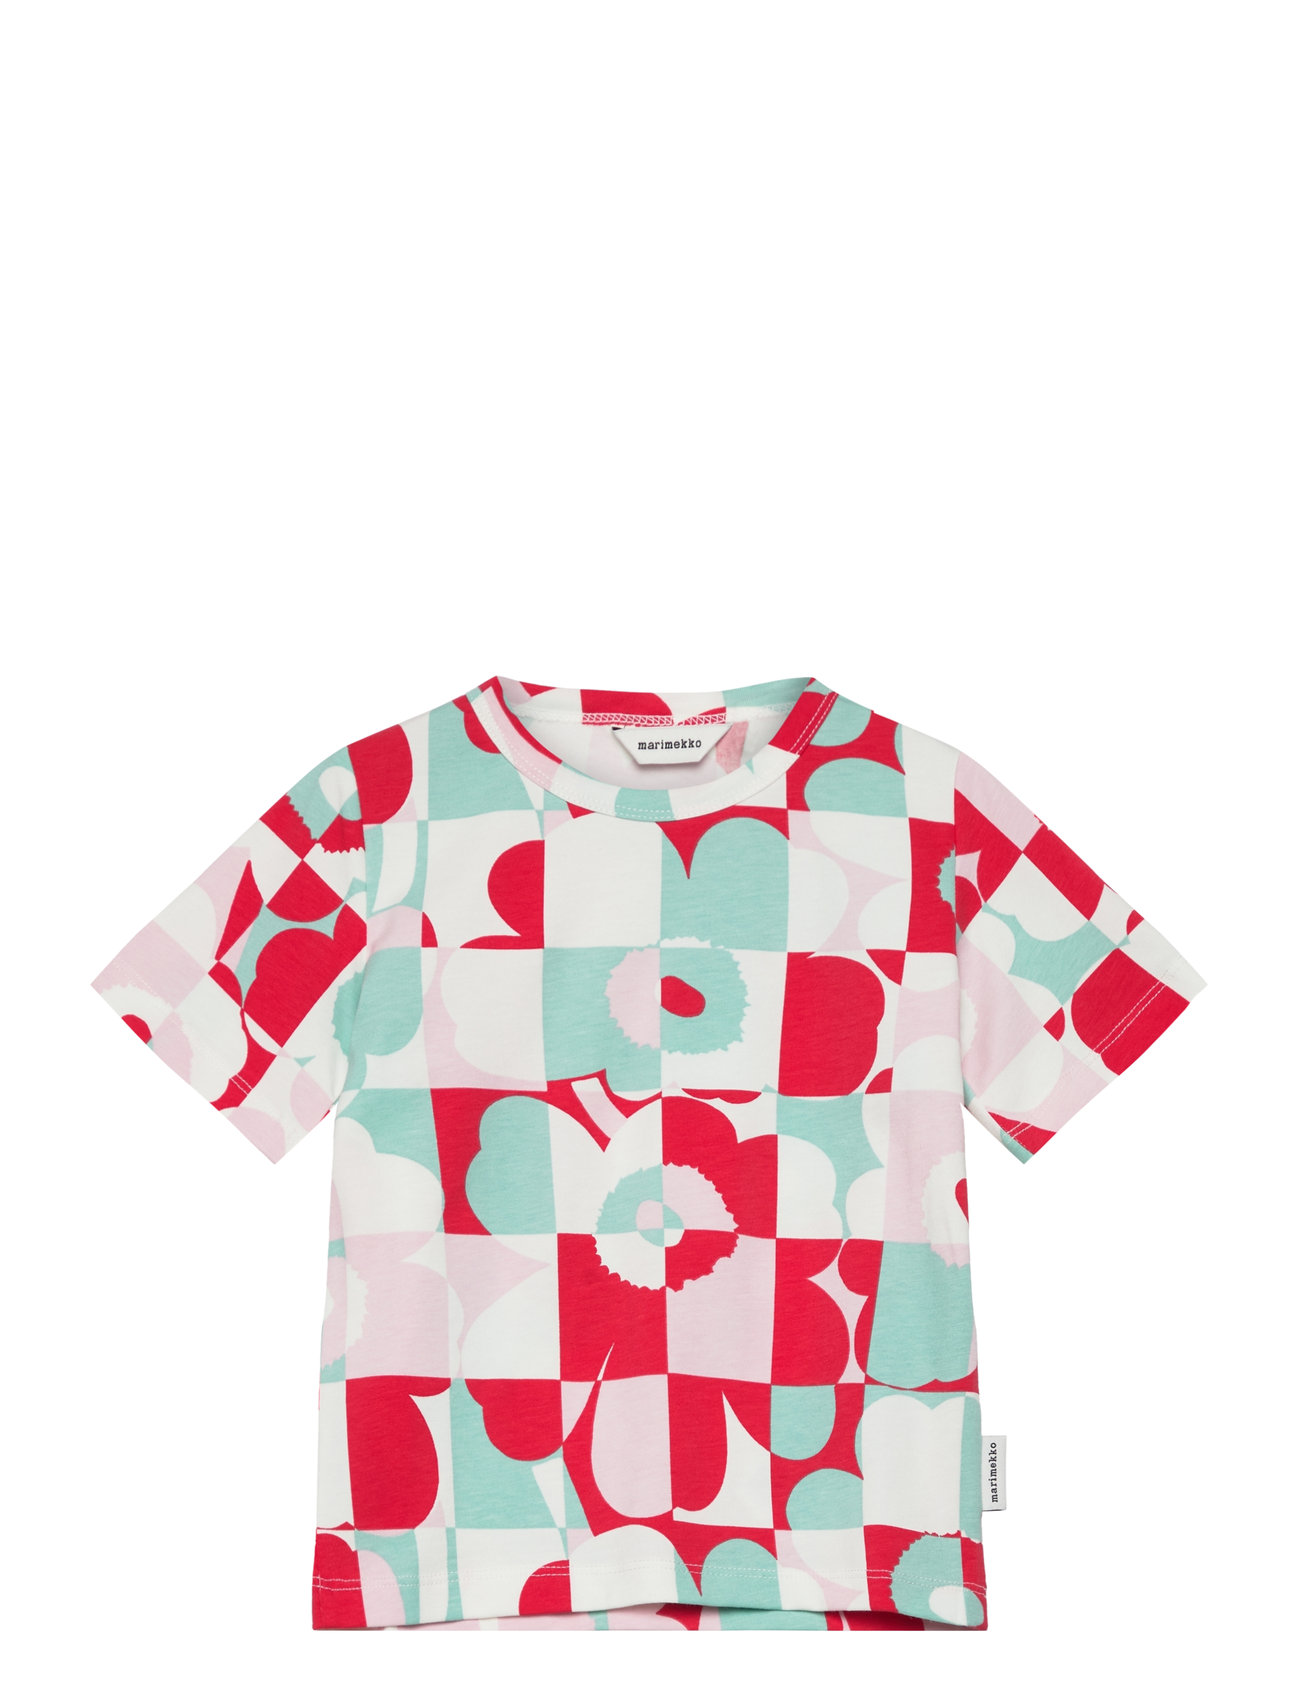 Soida Ruutu Unikko Ii Tops T-shirts Short-sleeved Multi/patterned Marimekko